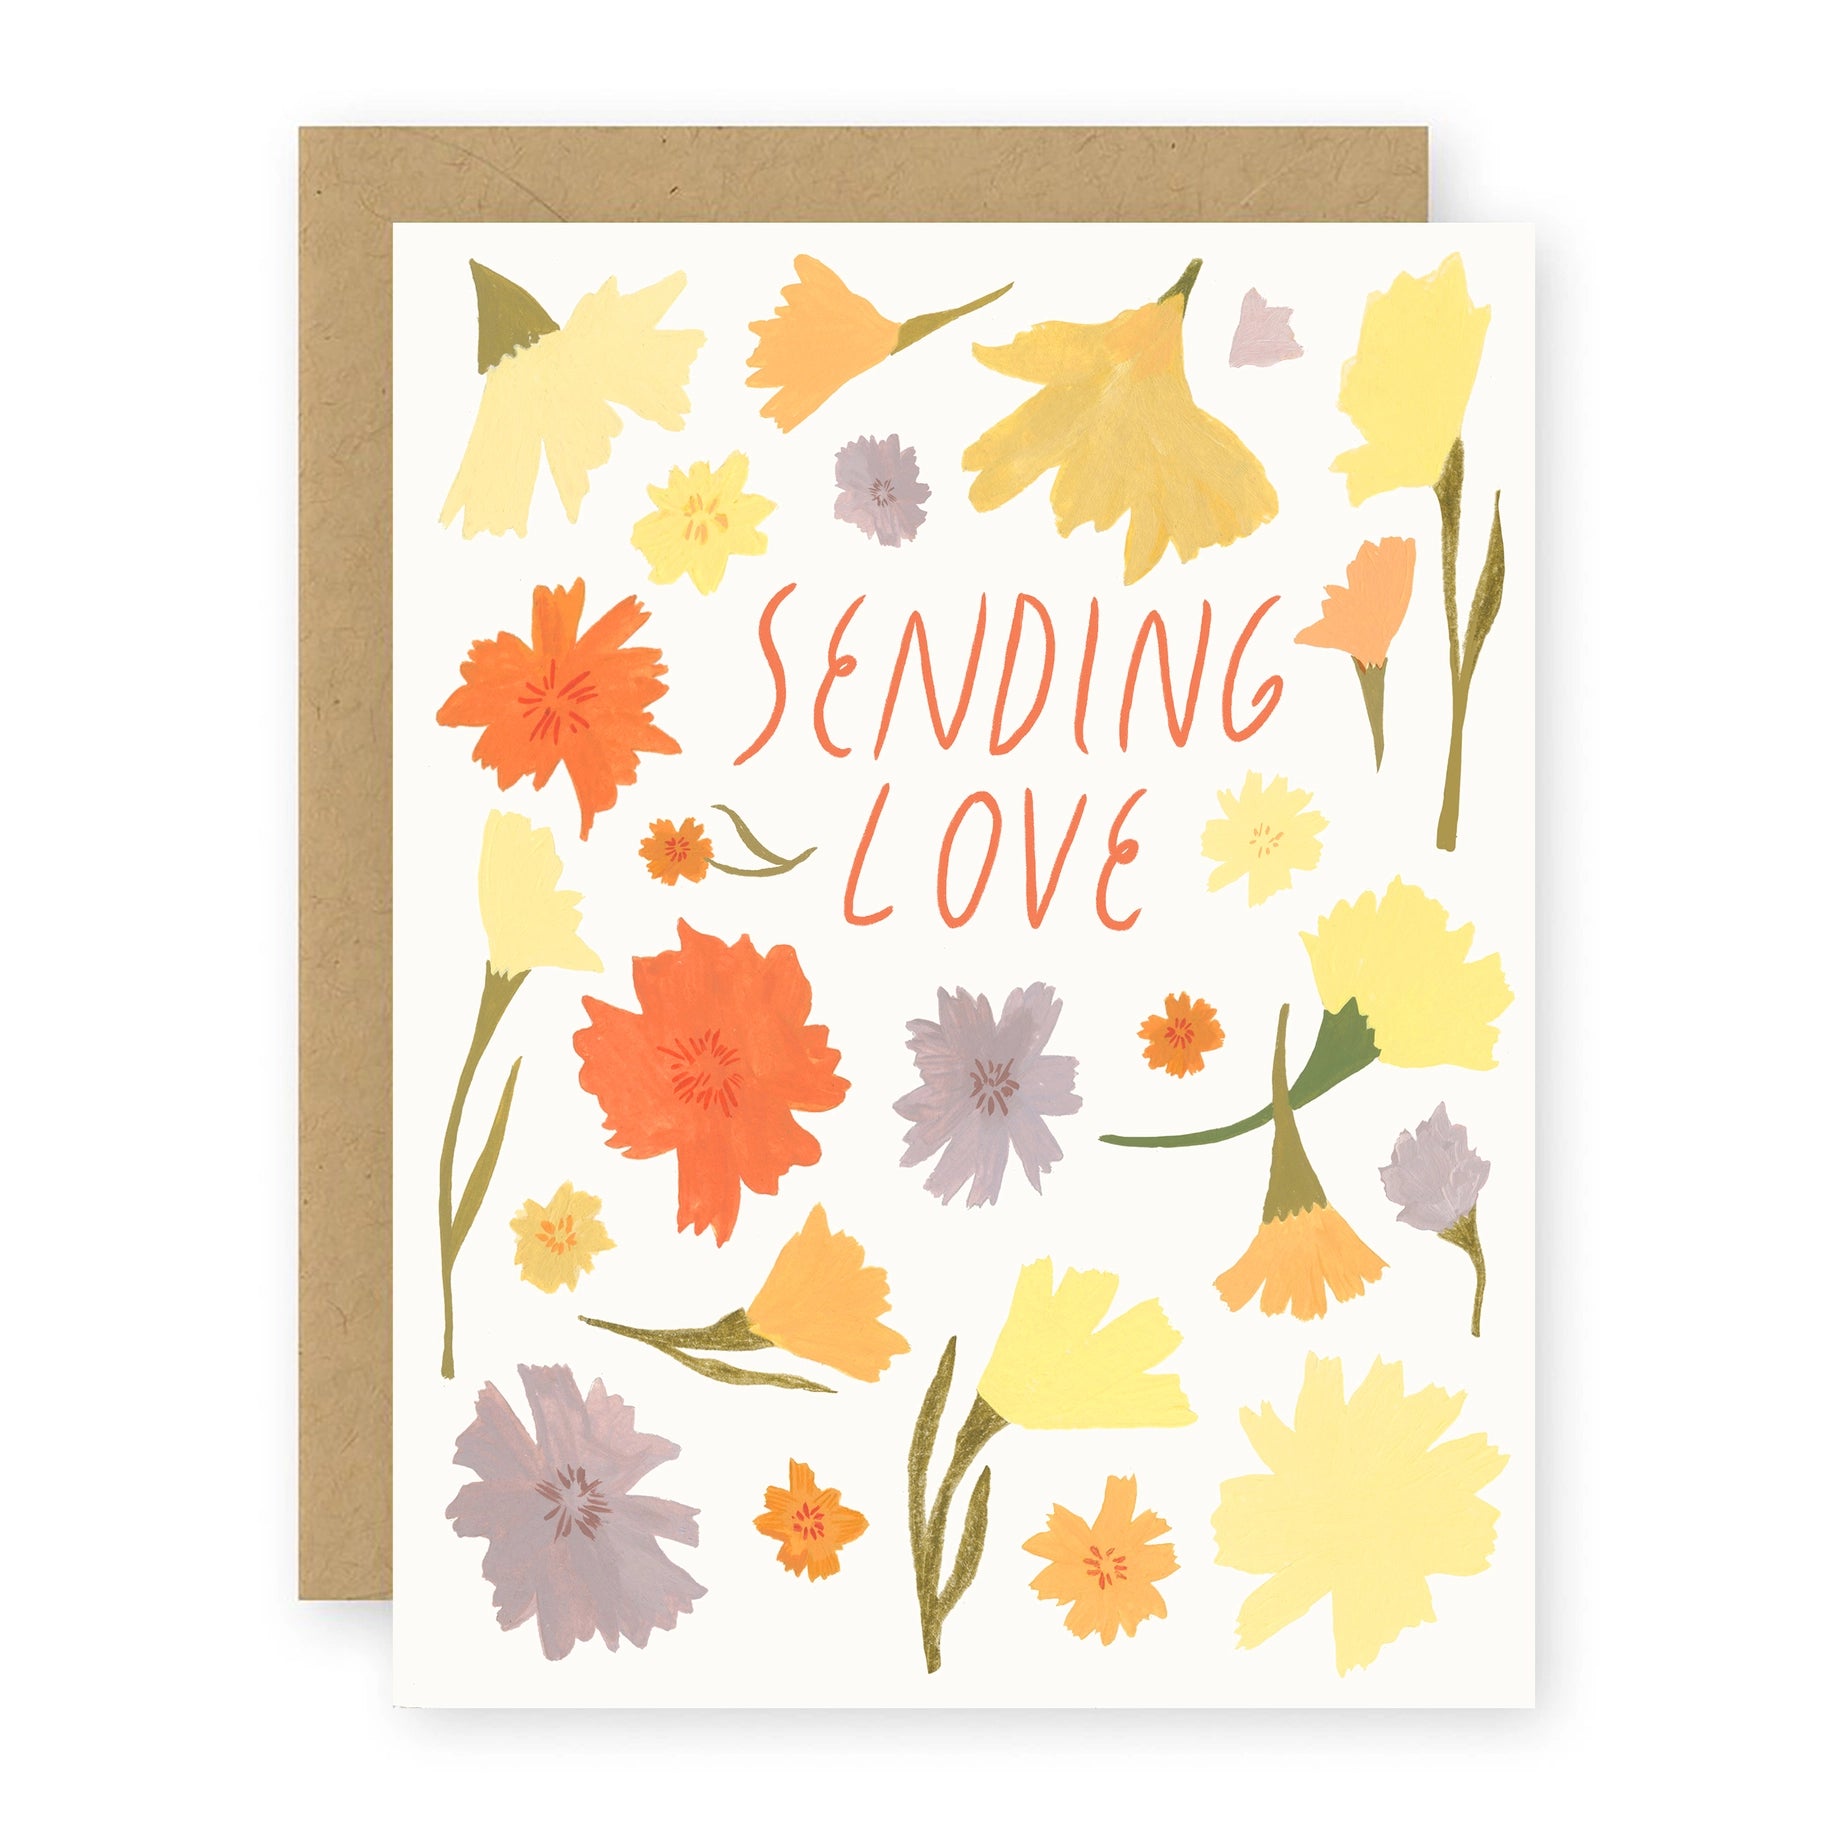 Sending Love - Sympathy Card